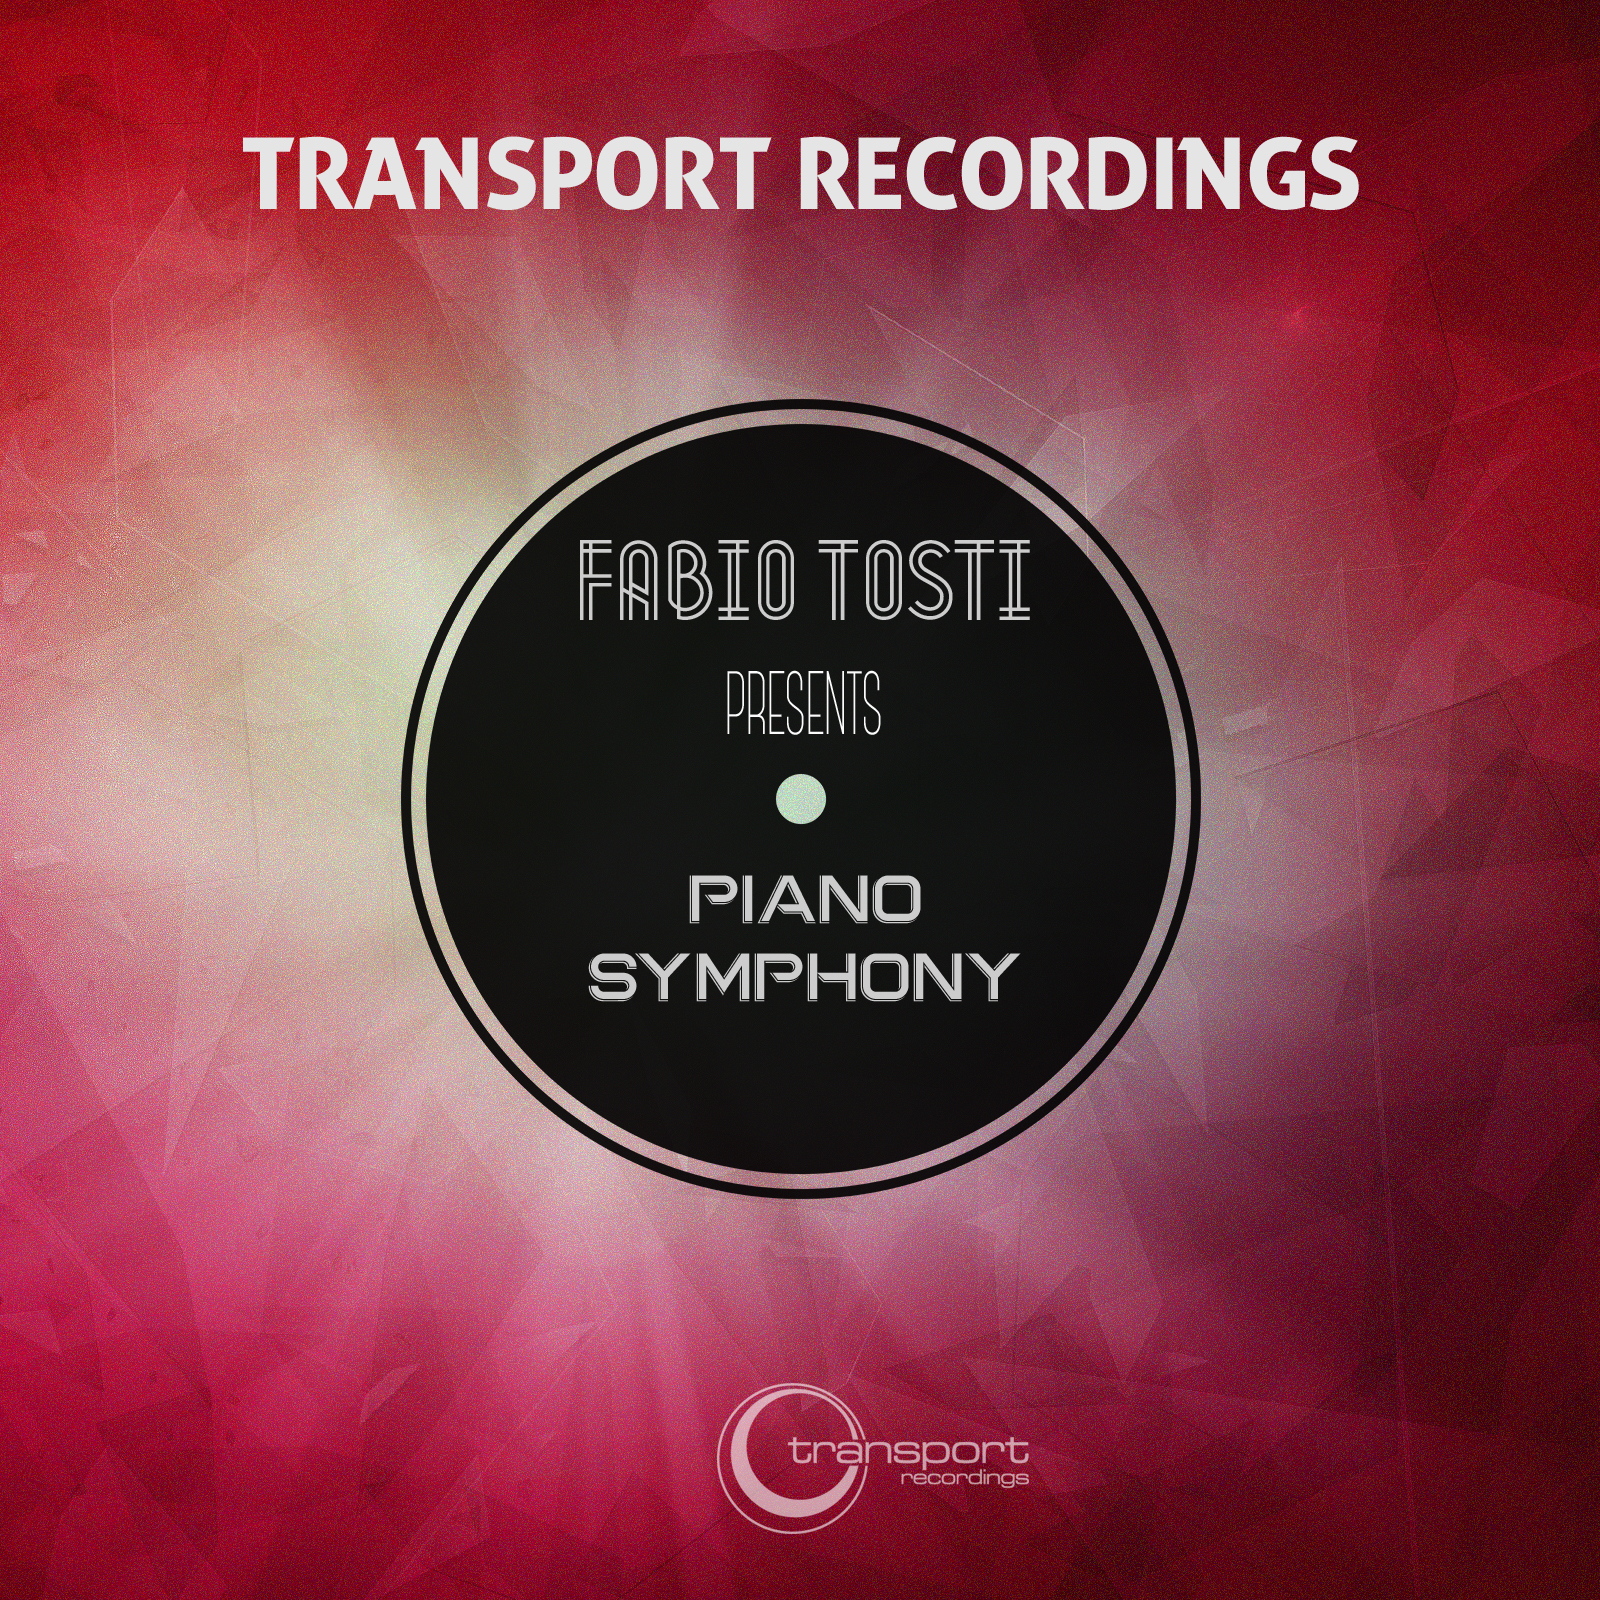 Fabio Tosti (Piano Symphony)